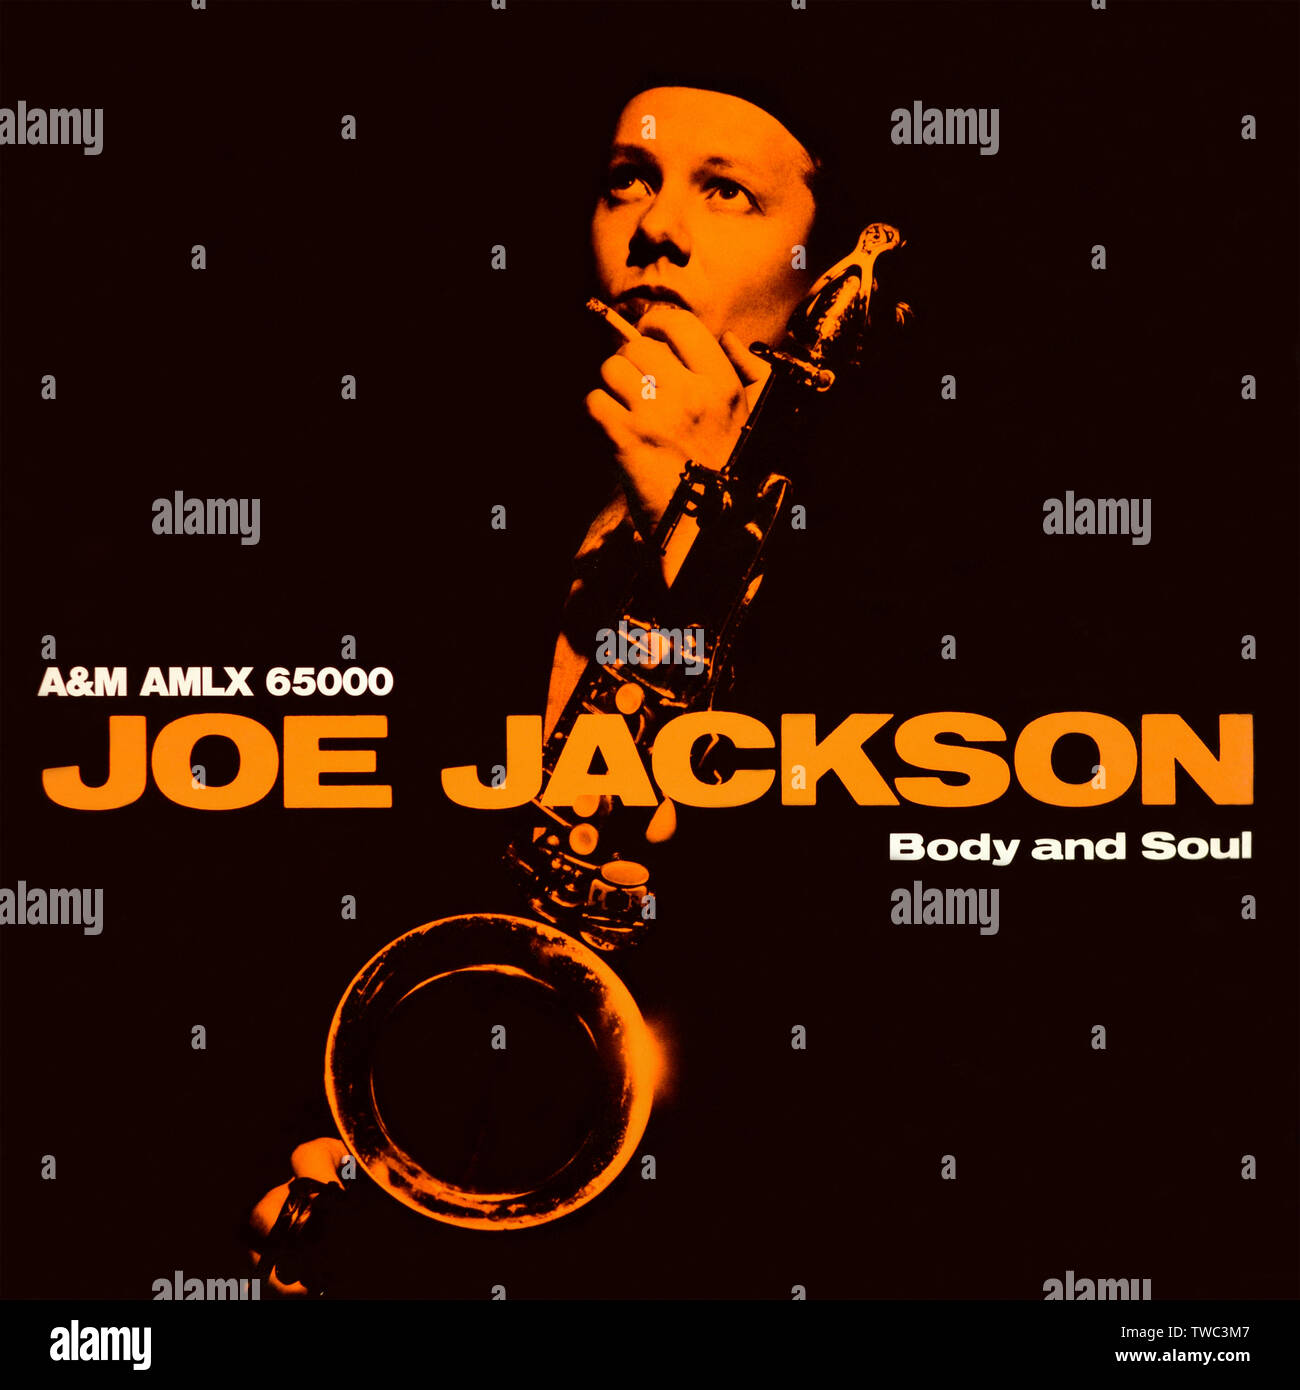 Joe Jackson - original Vinyl Album Cover - Body and Soul - 1984 Stockfoto